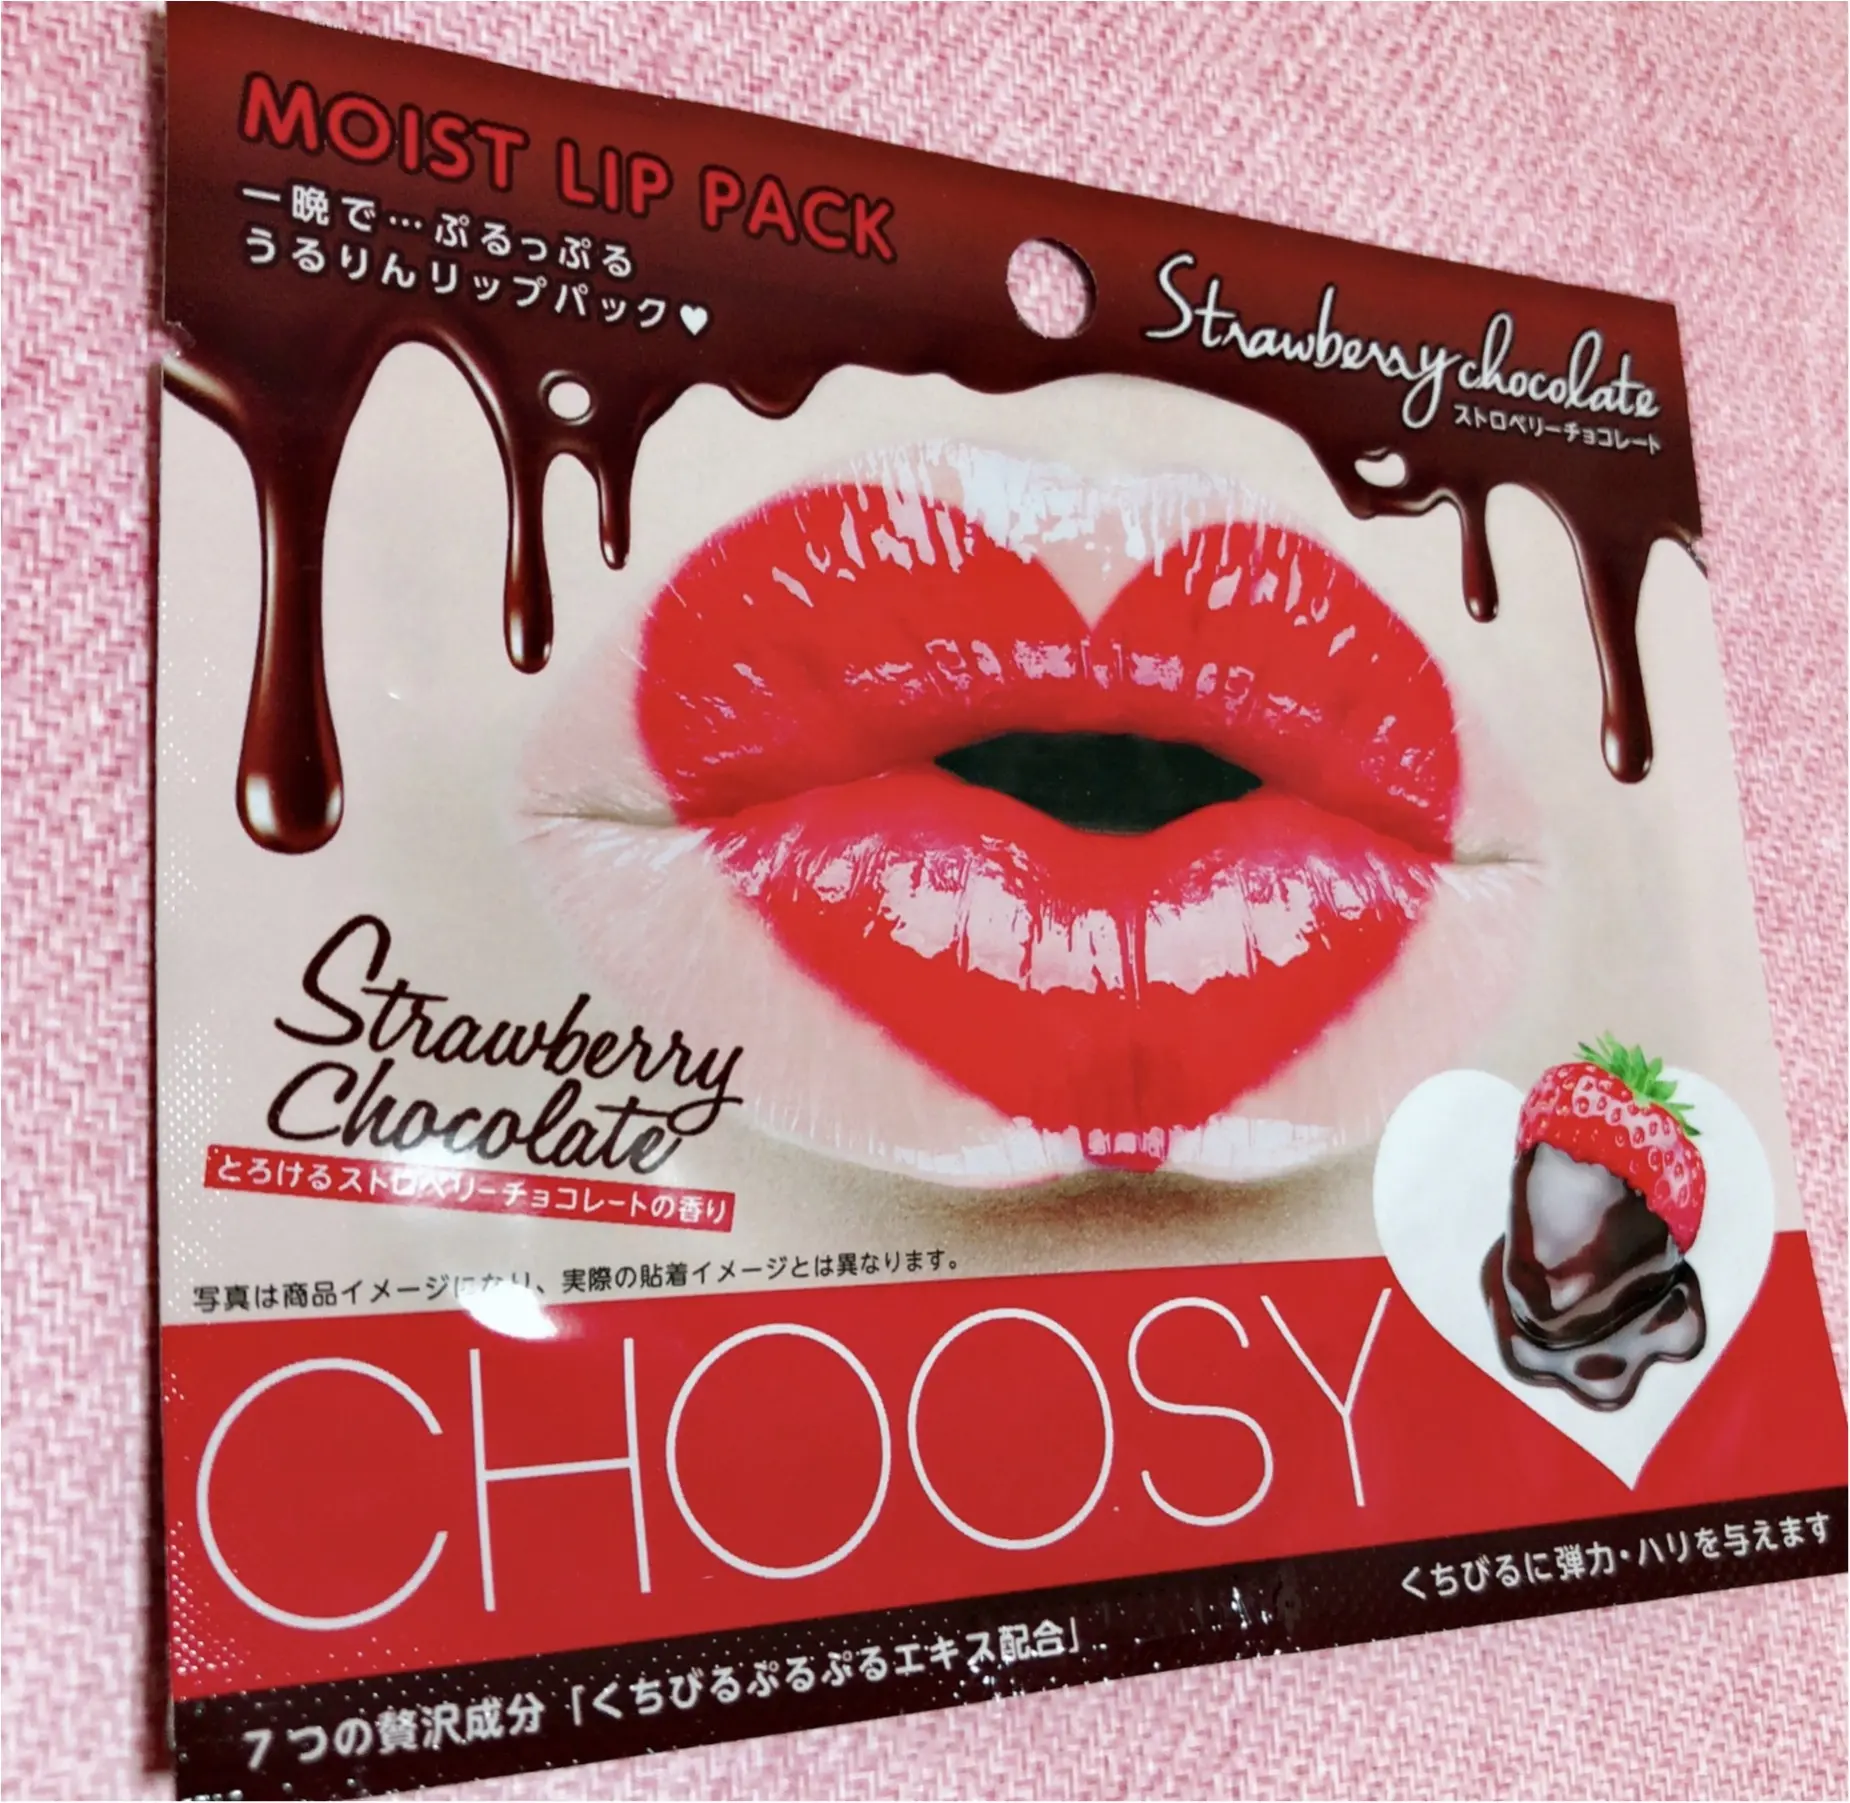 choosy chocolates